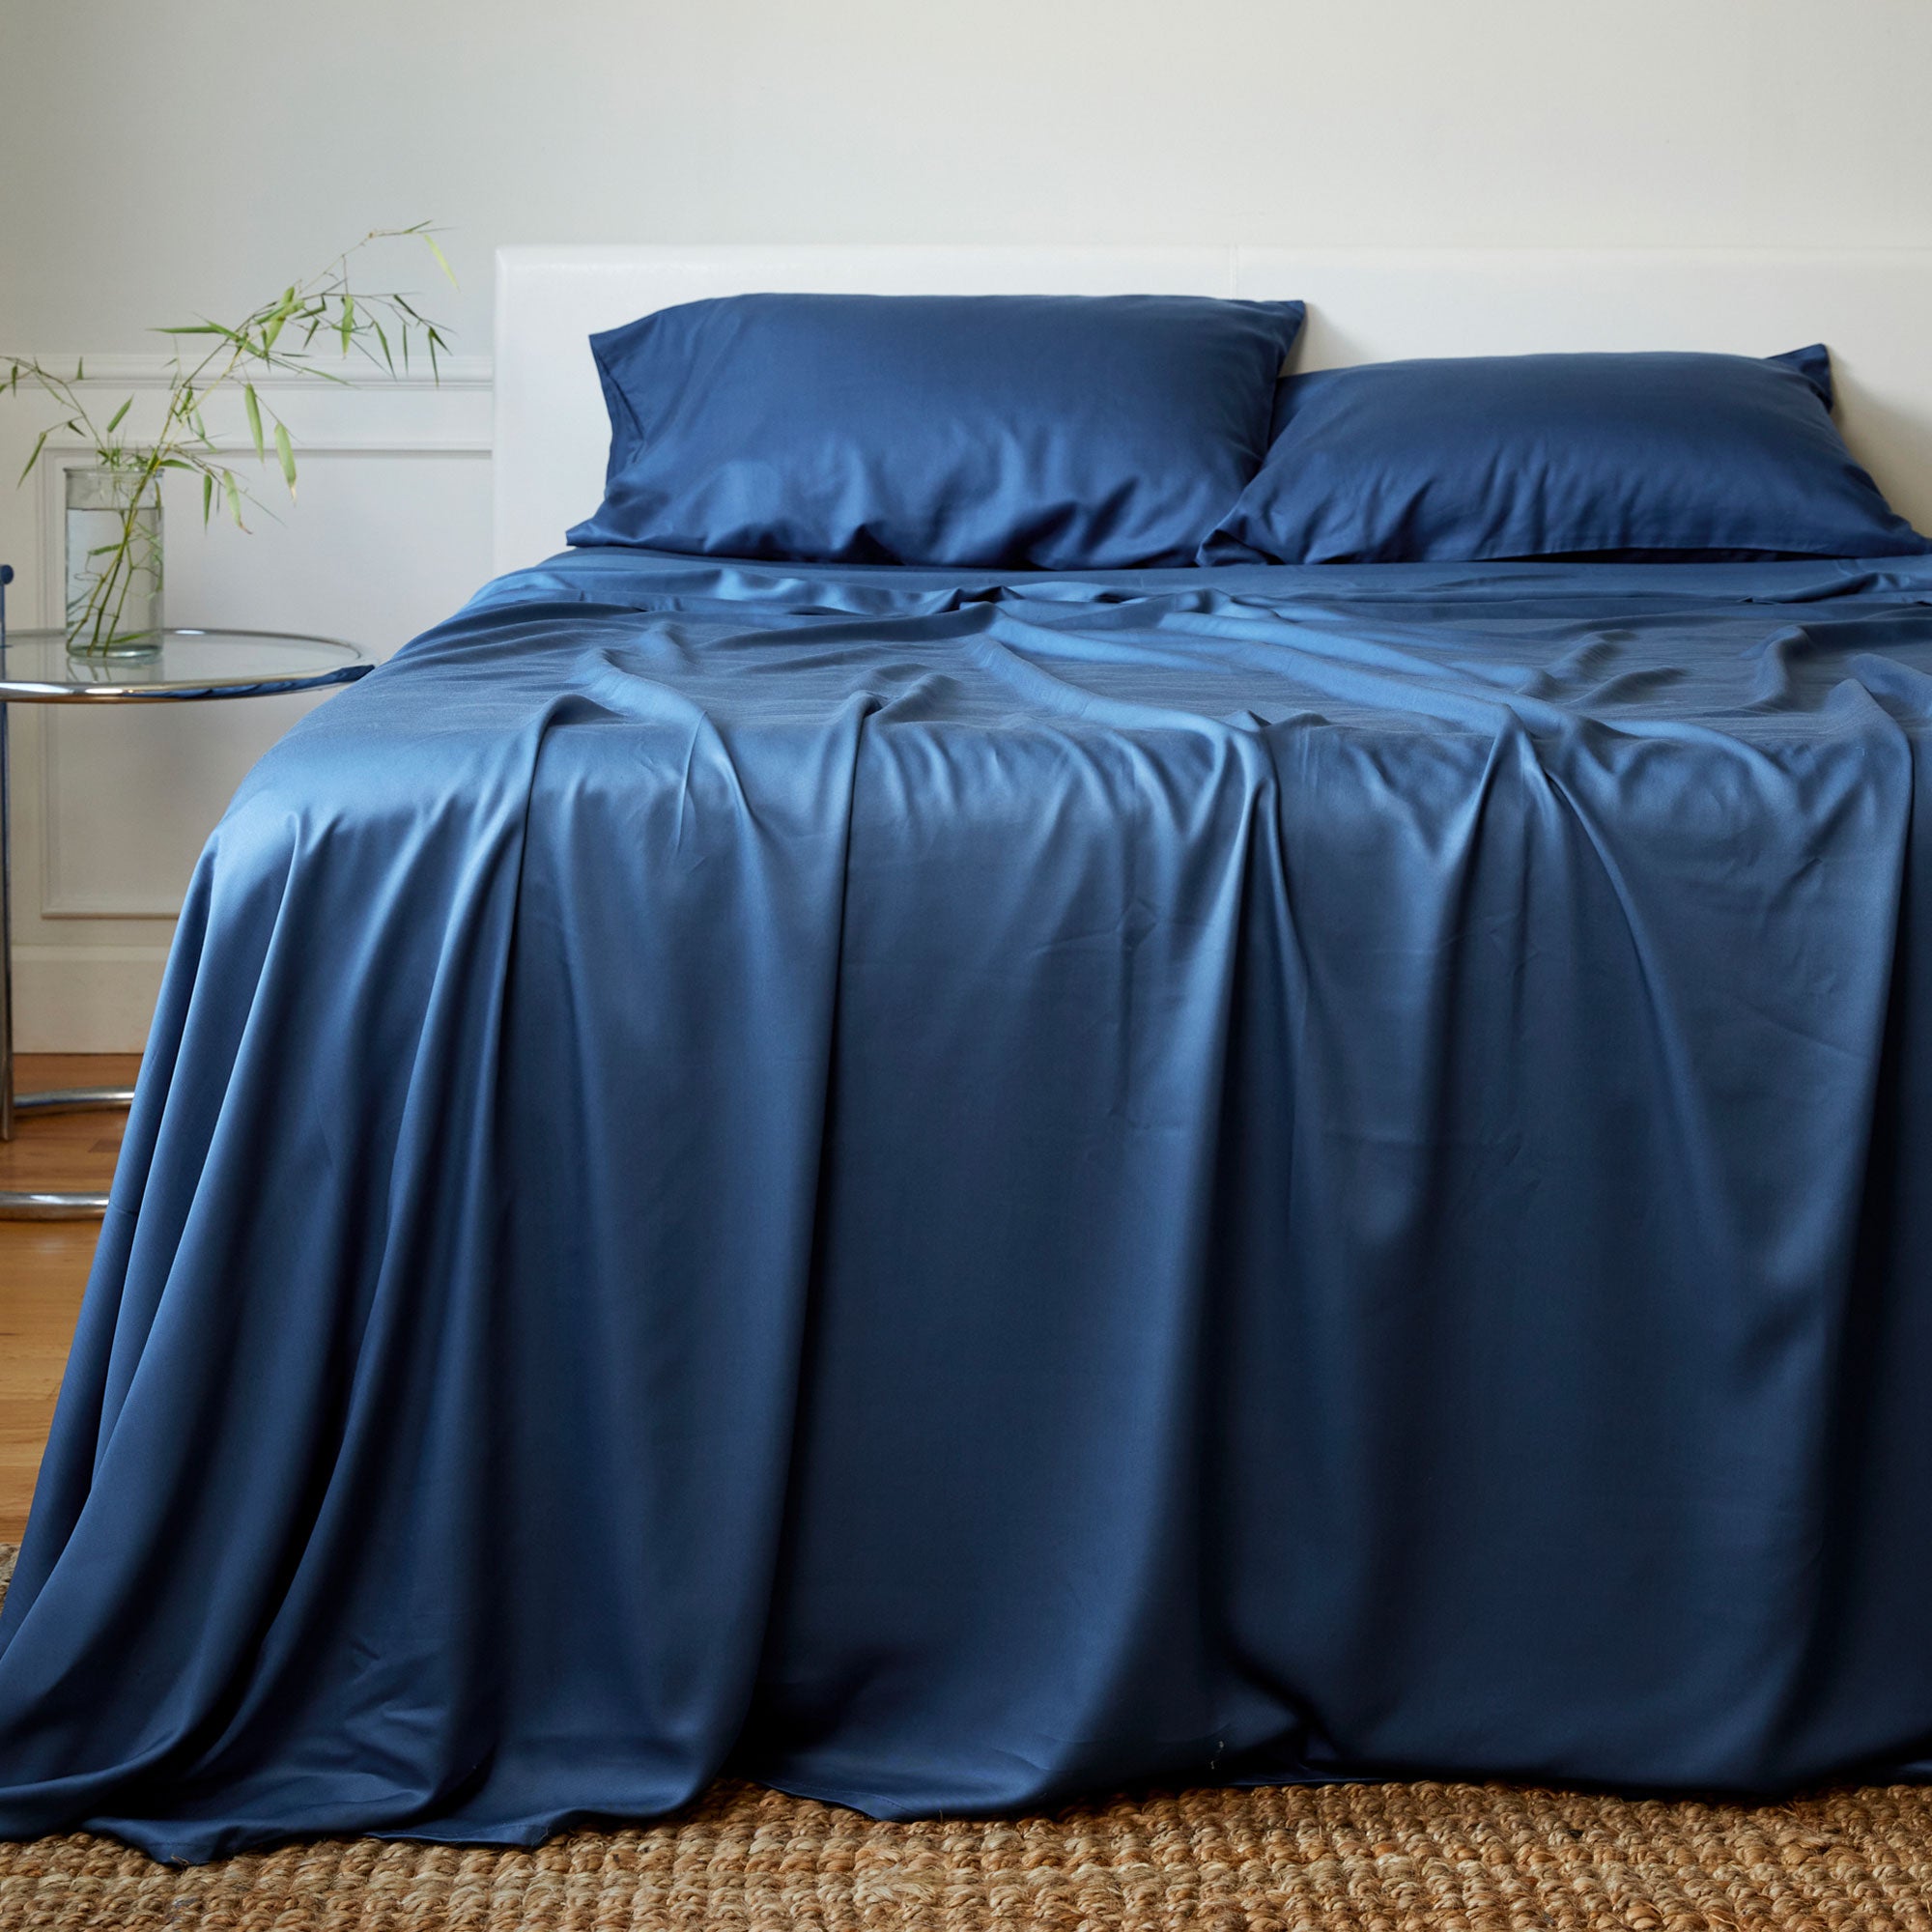 indigo bamboo sheet set and pillows on an elegant bed BedVoyage Bamboo Sheet set blue